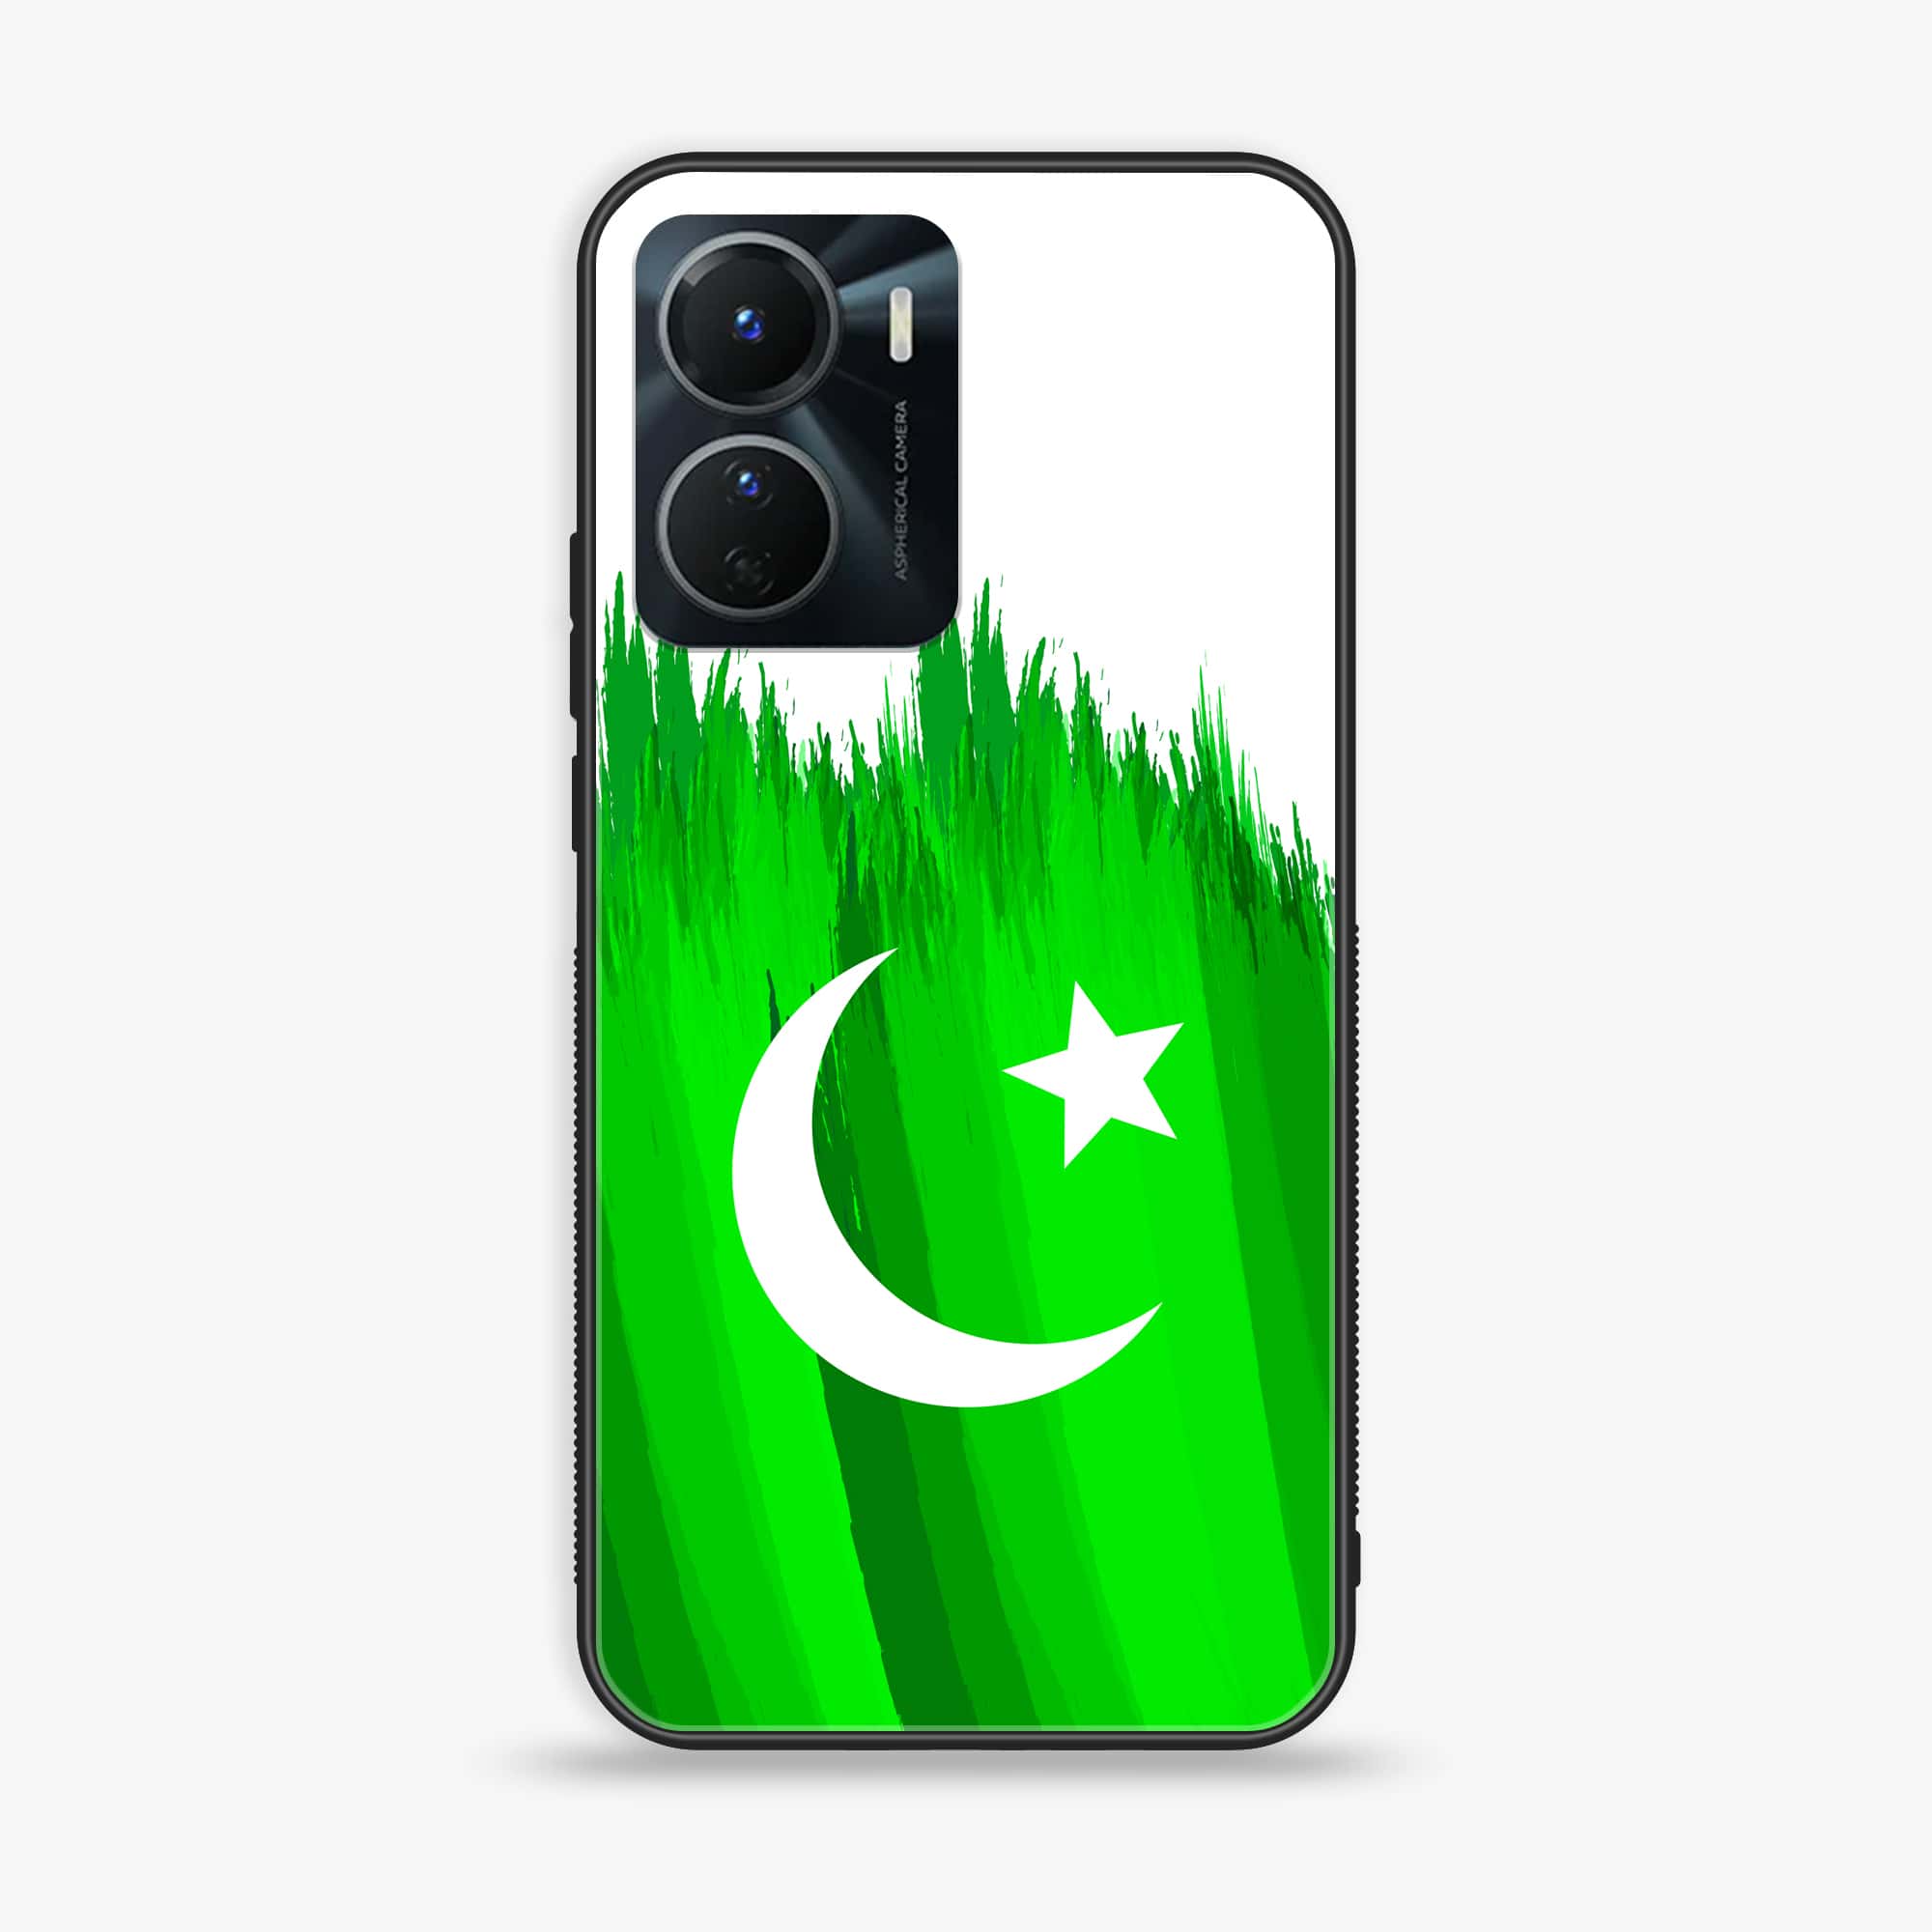 Vivo Y16 - Pakistani Flag Series - Premium Printed Glass soft Bumper shock Proof Case